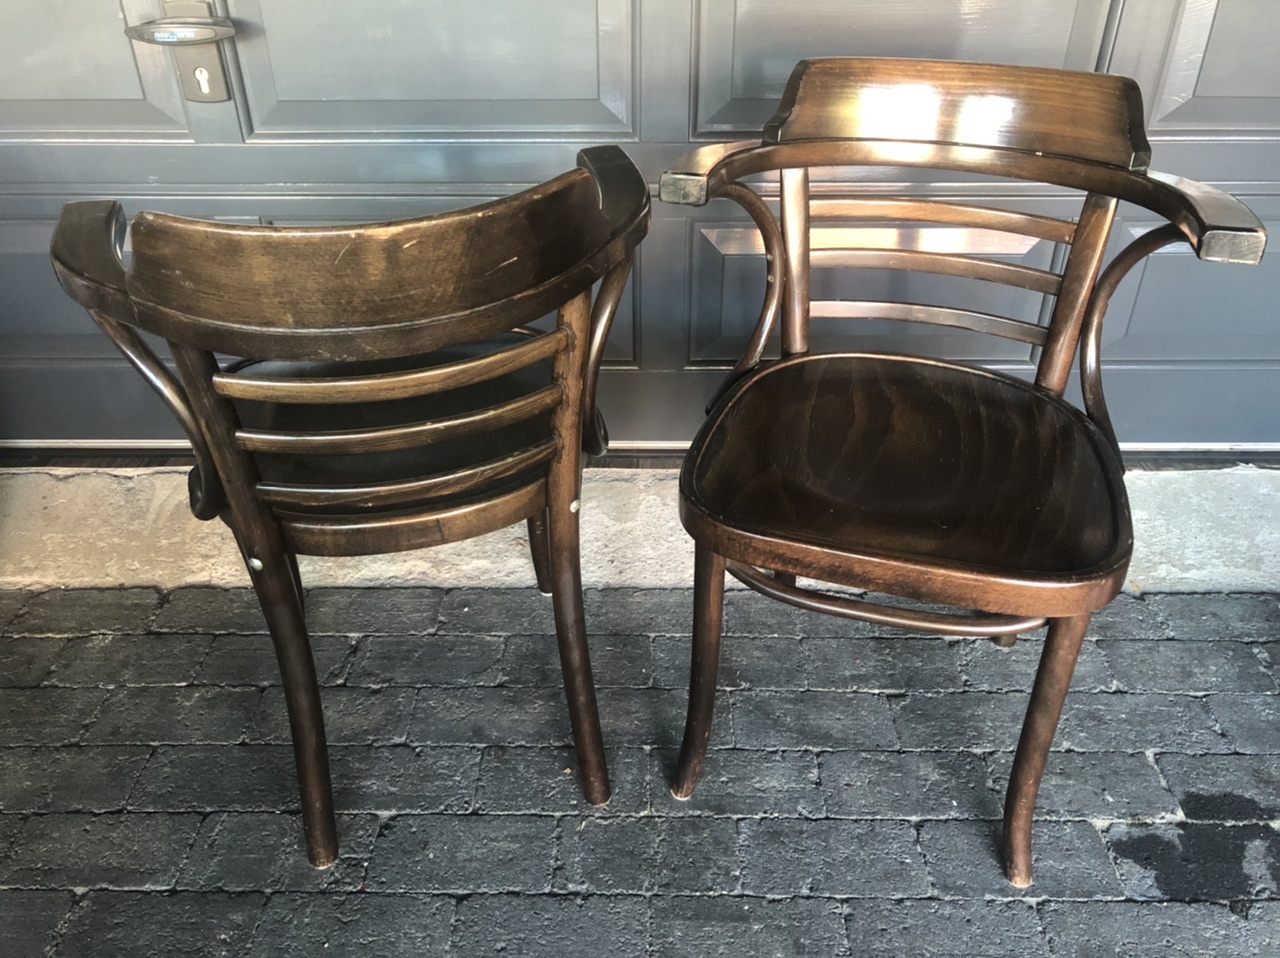 Cafestoelen de parel apeldoorn kroeg meubilair stoelen cafe chairs stolar chaises